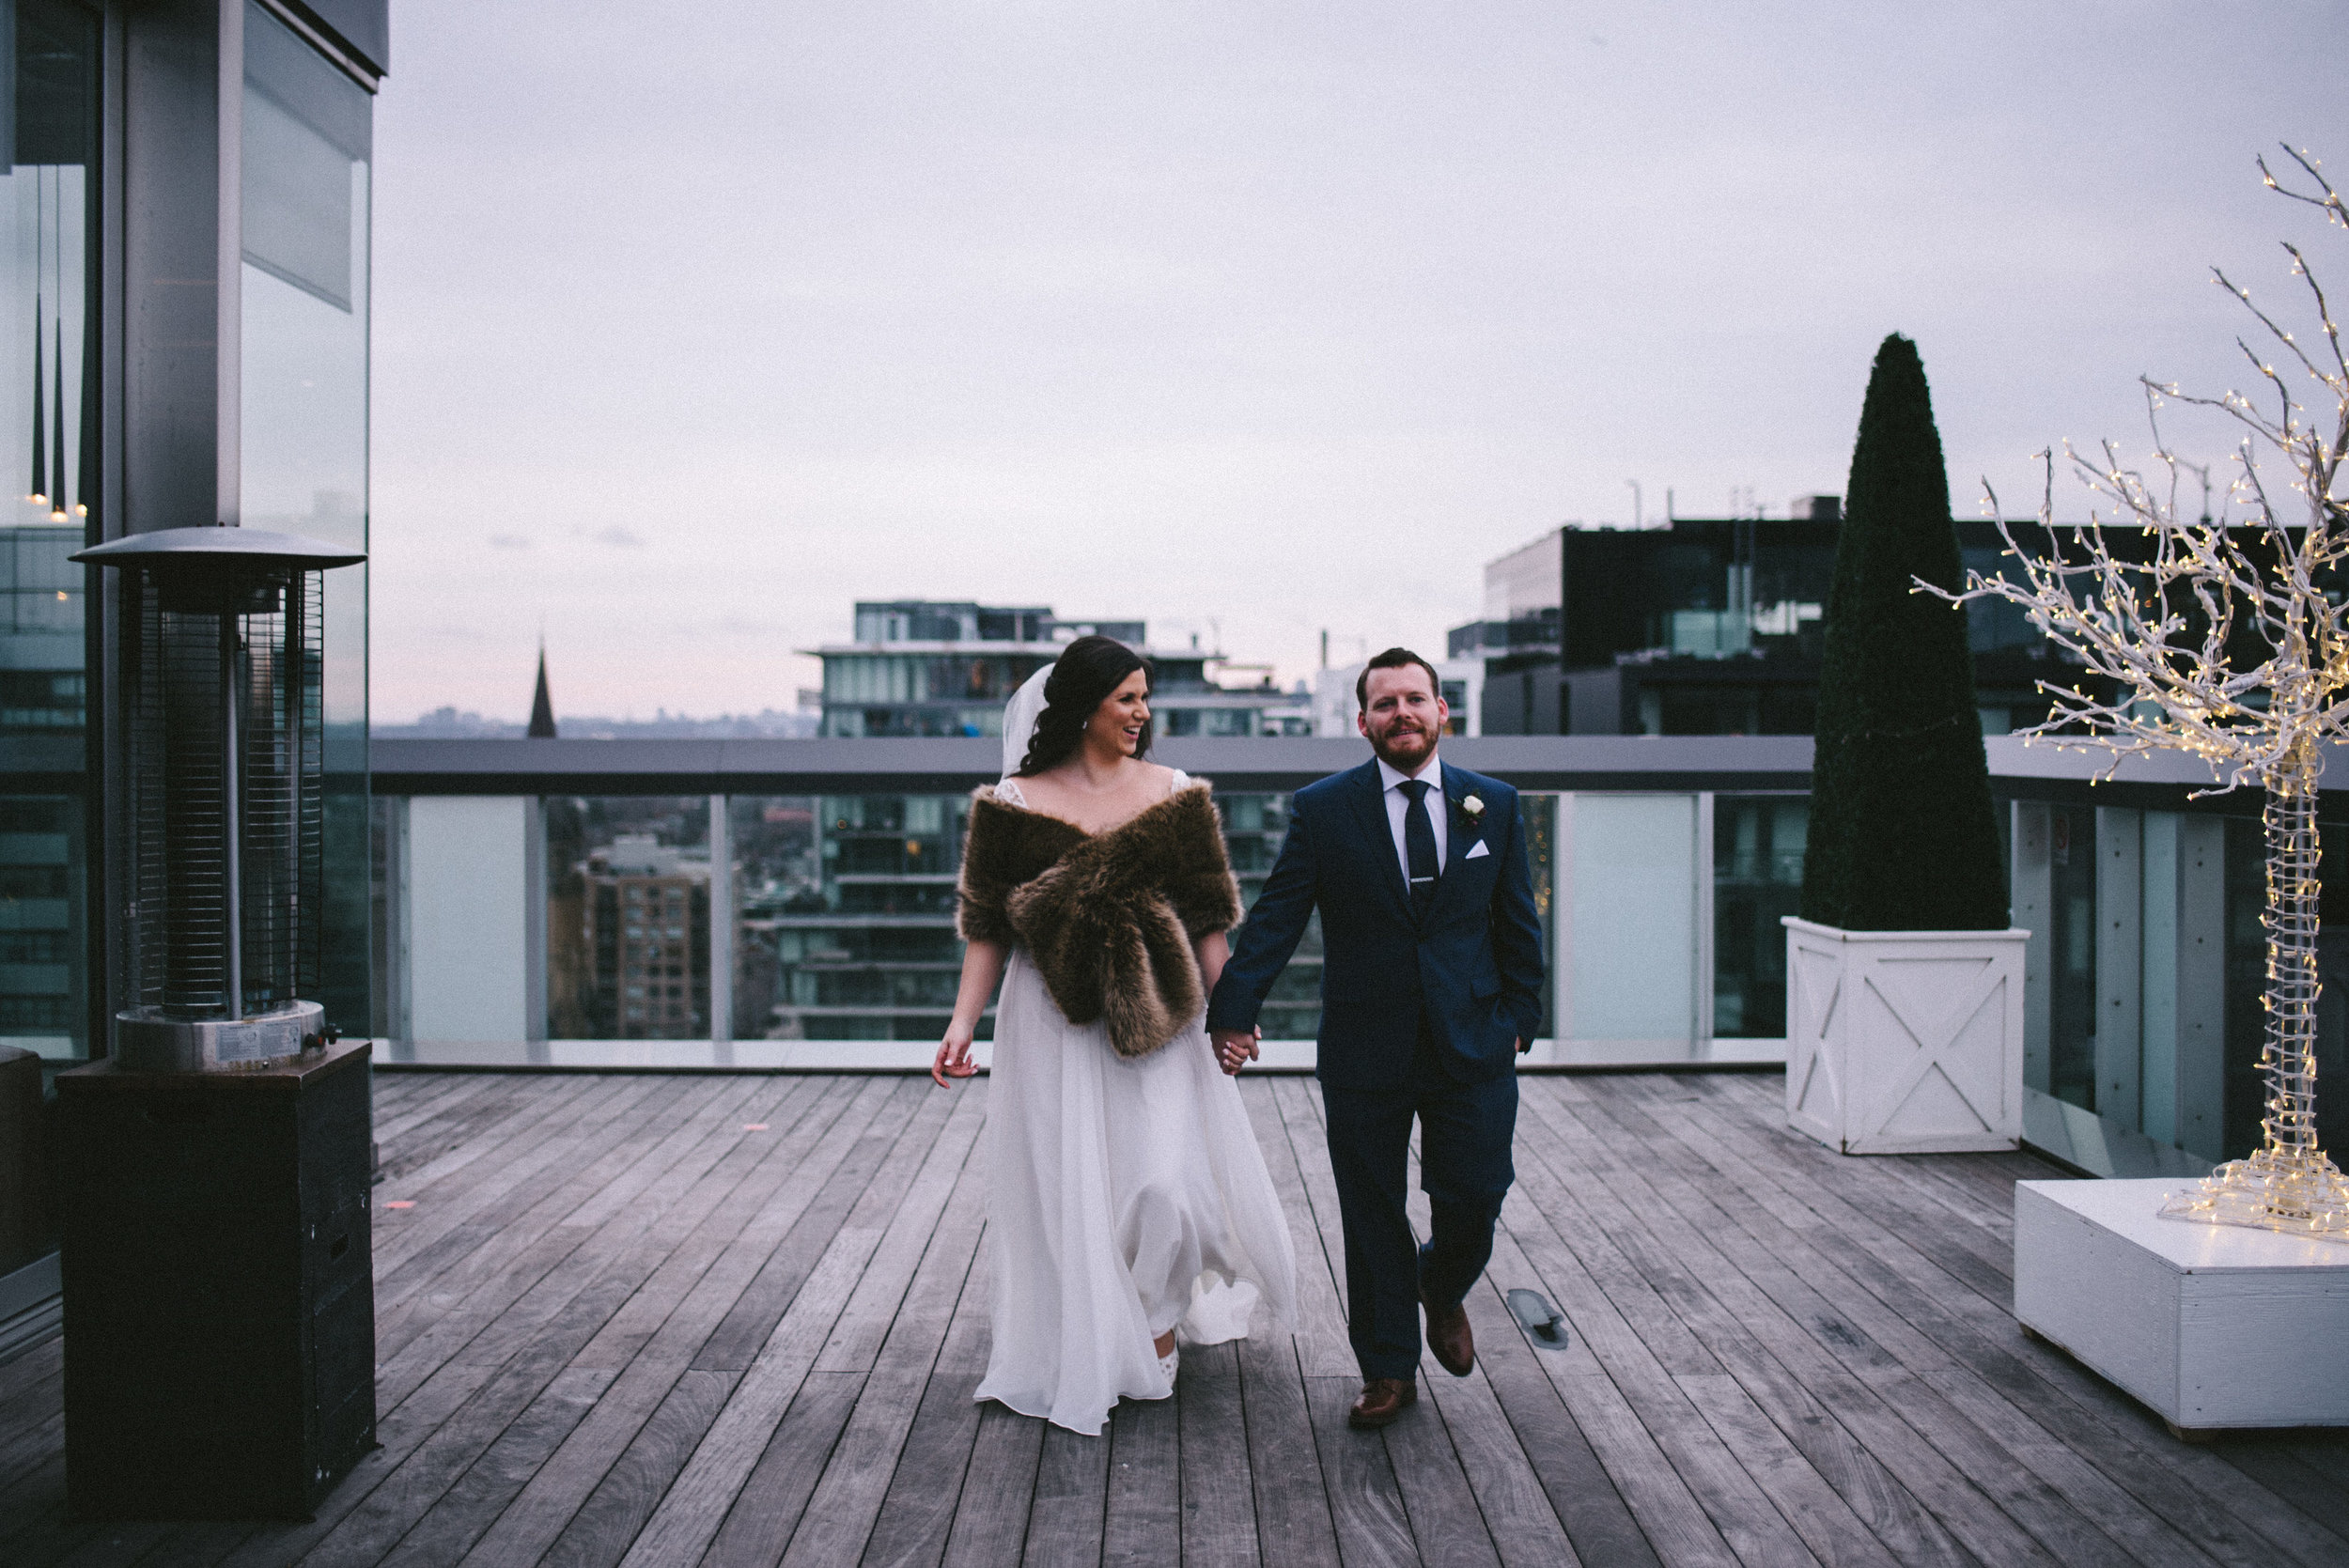 Urban Downtown Toronto Wedding, The Burroughes Building